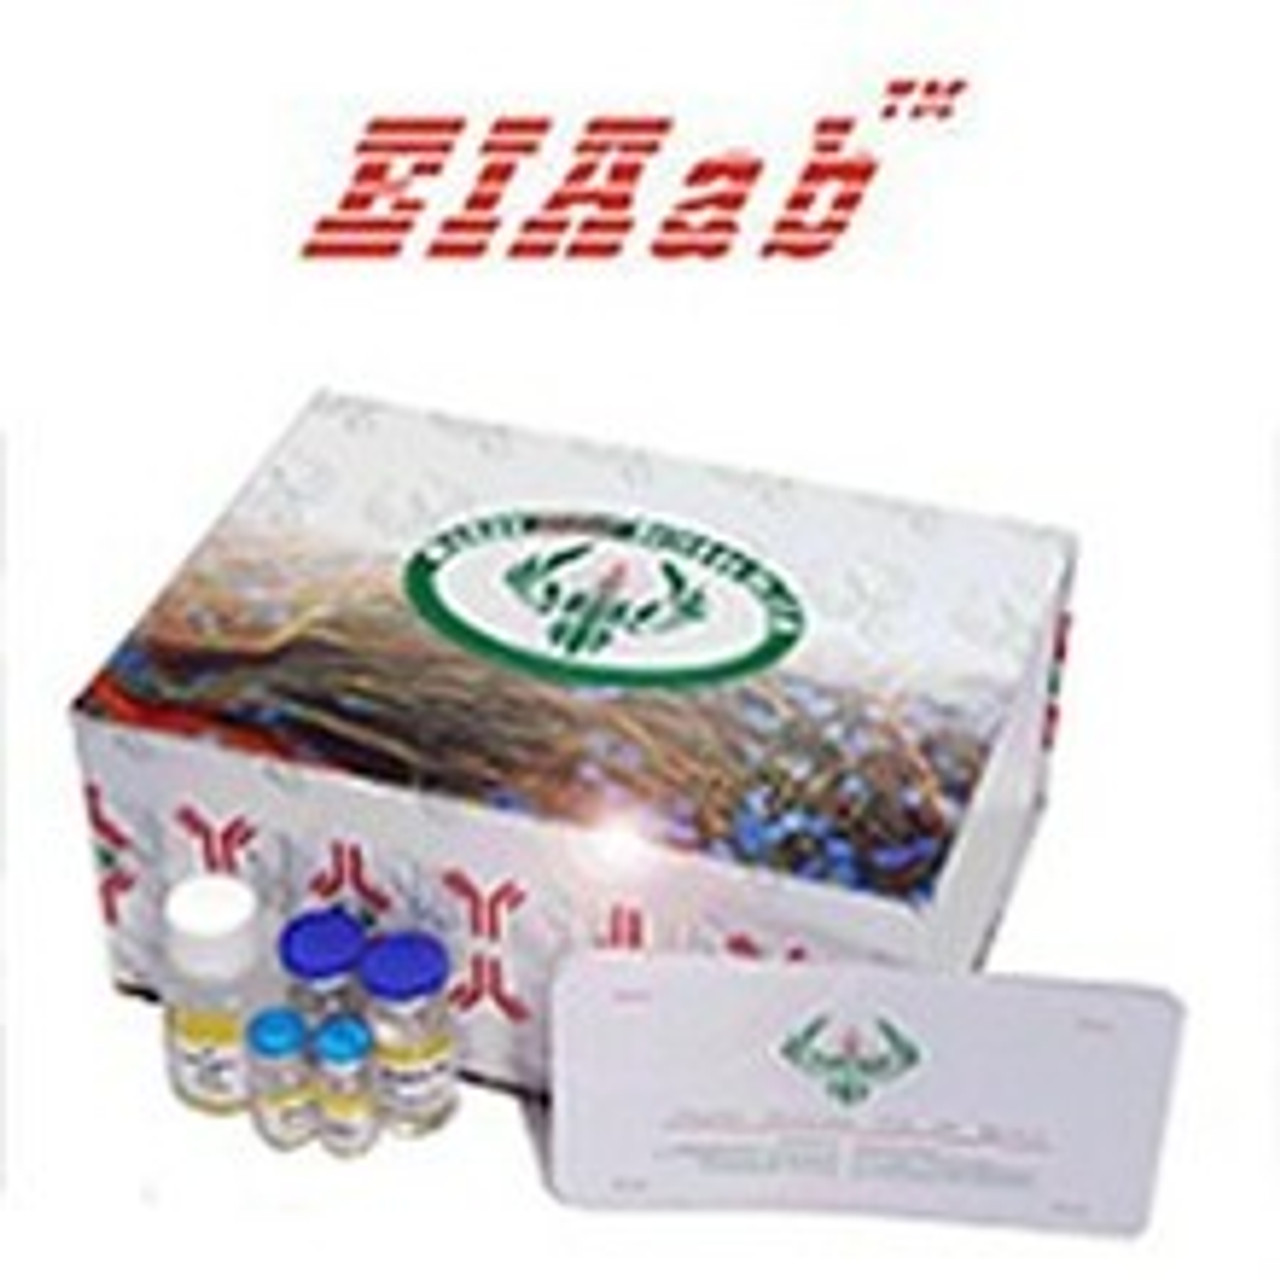 Rat S100a10/Protein S100-A10 ELISA Kit